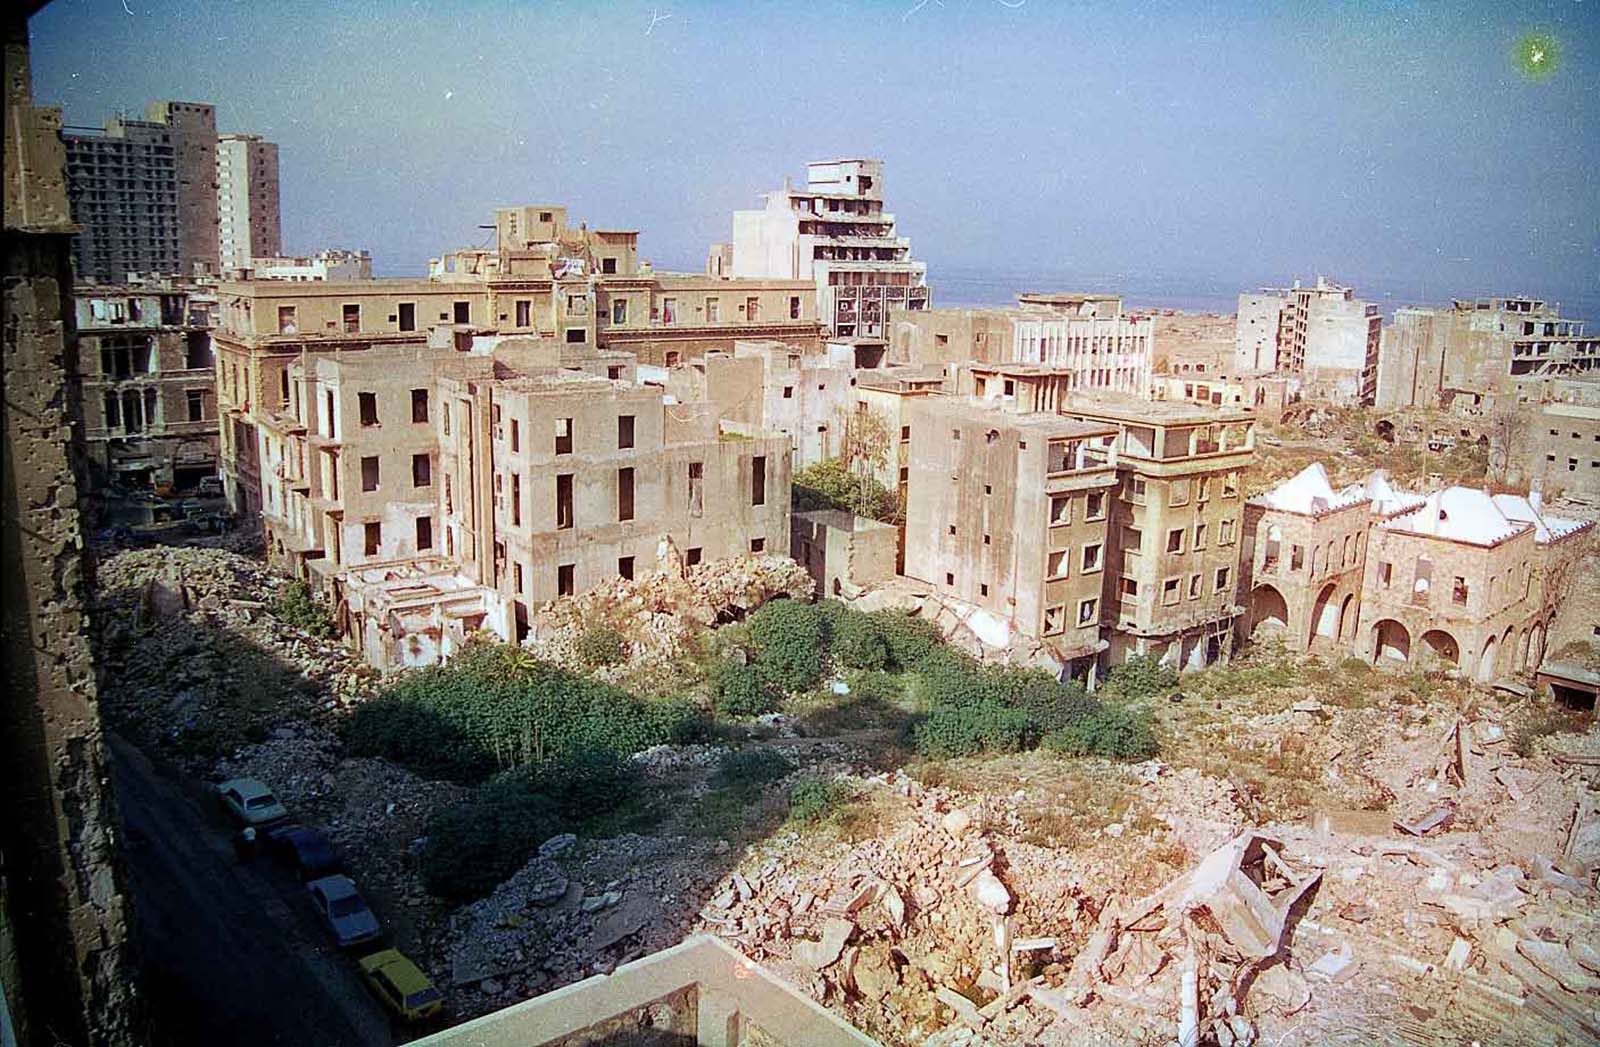 Lebanese Civil War photos